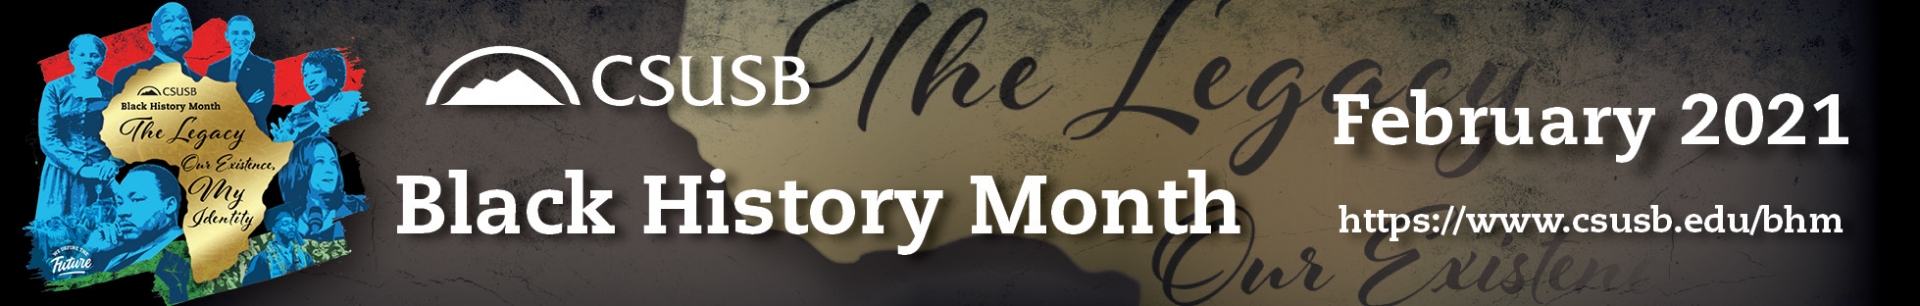 Black History Month 2021 web banner